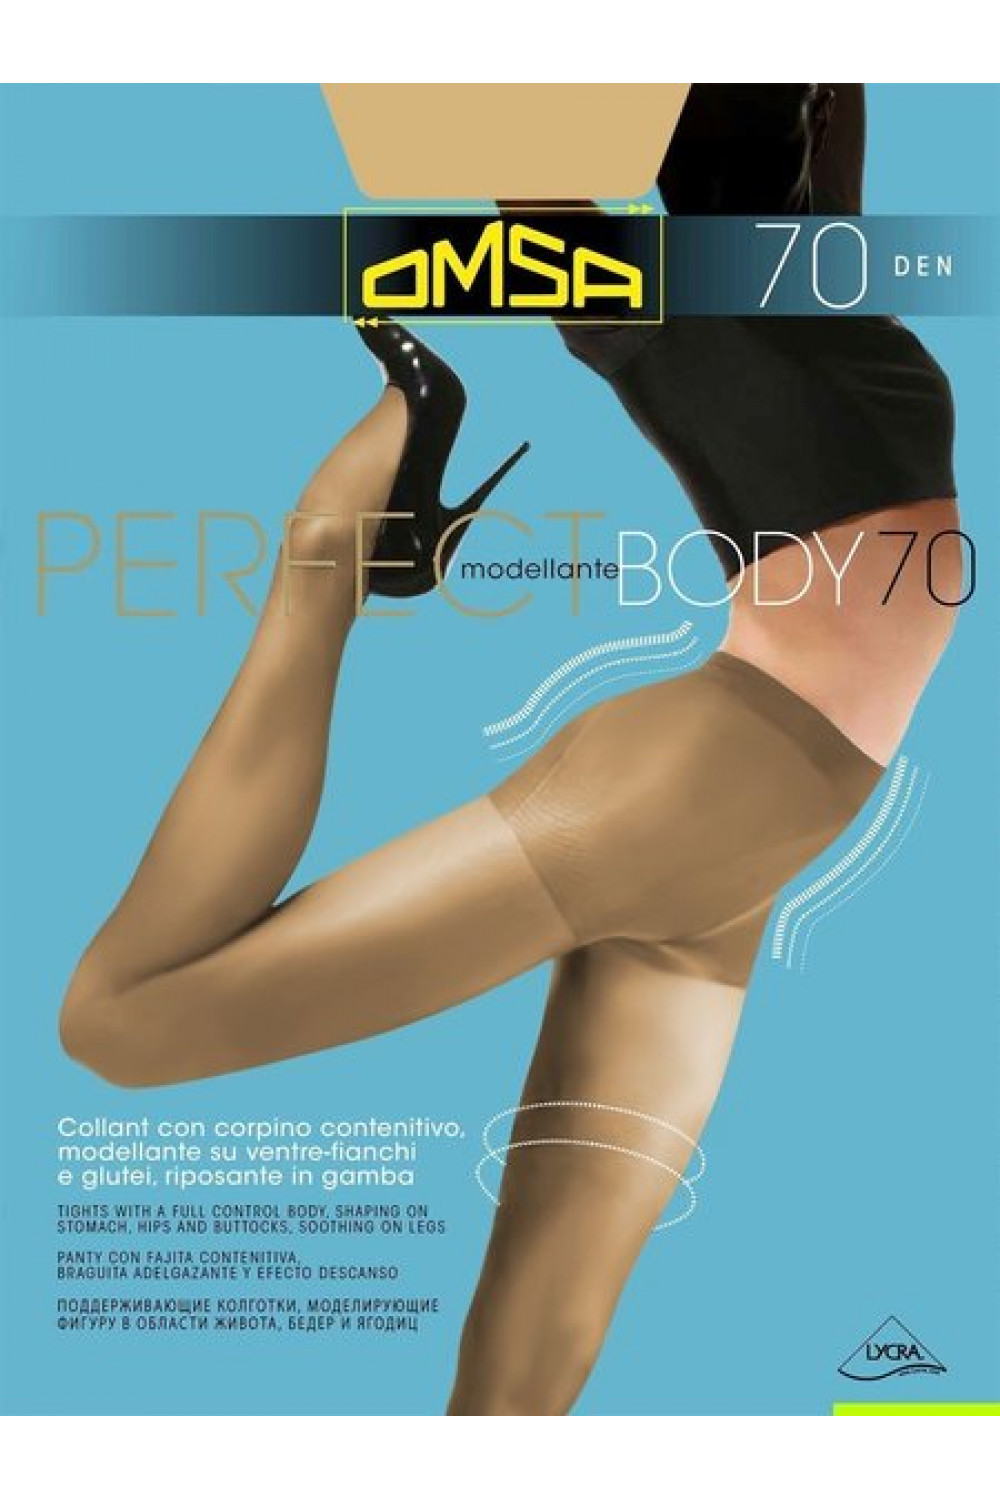 OMSA PERFECT BODY 70, колготки (50/5), с утягивающими штанишками, моделирующие фигуру